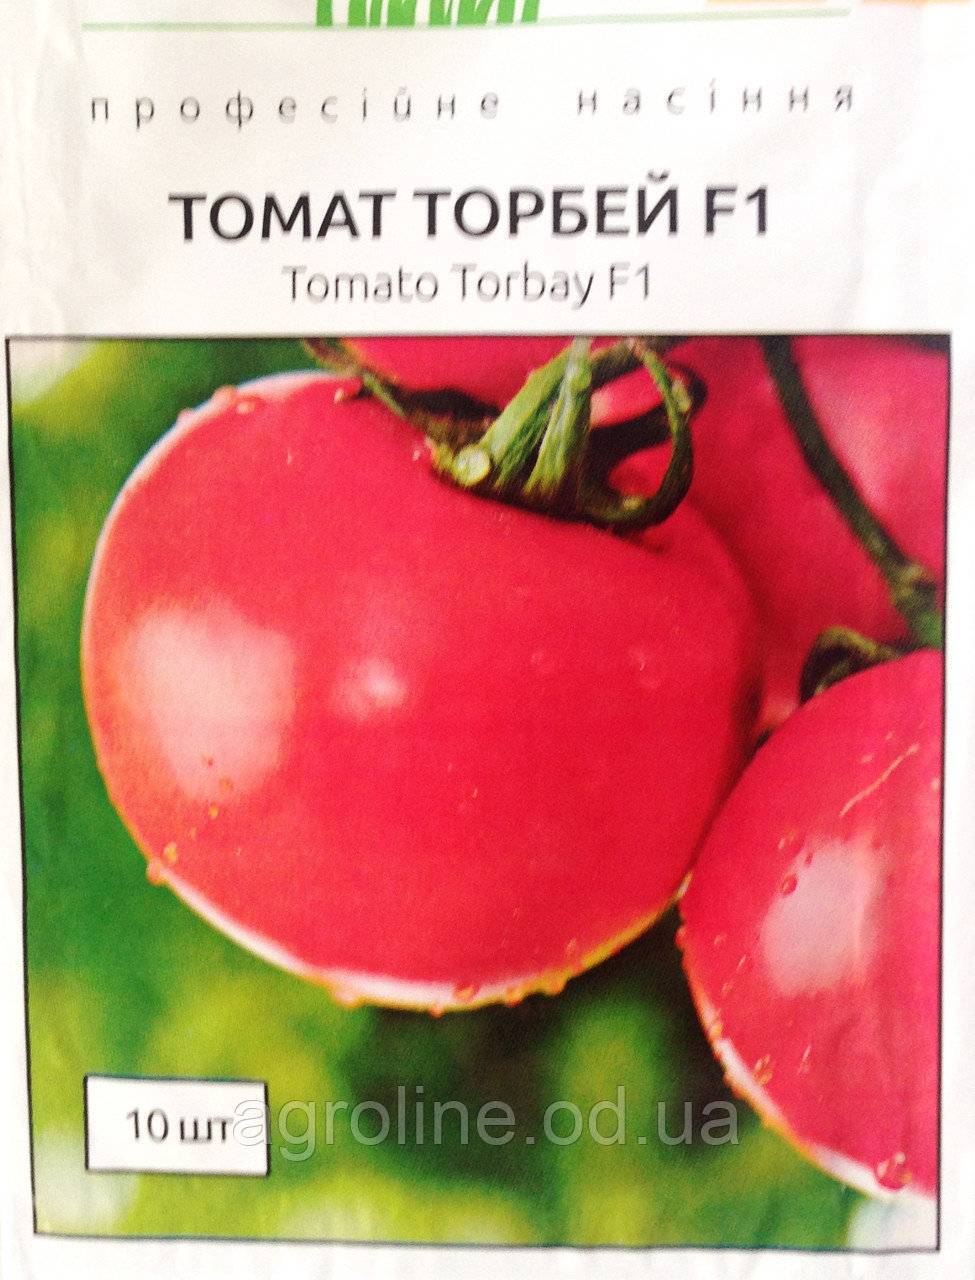 Описание и характеристика большого мясистого томата «торбей f1»